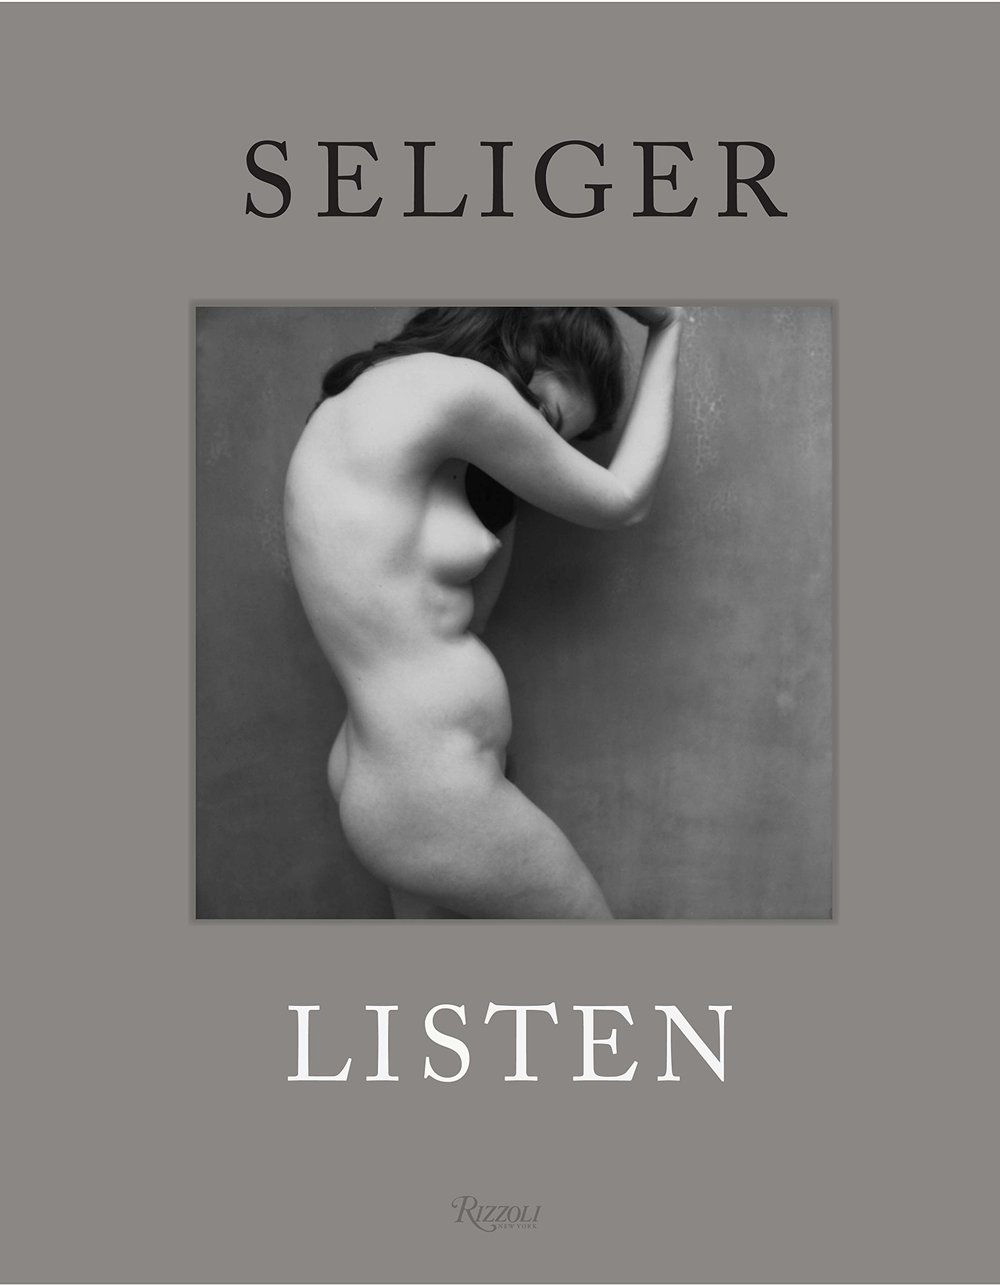 Listen by Mark Seliger